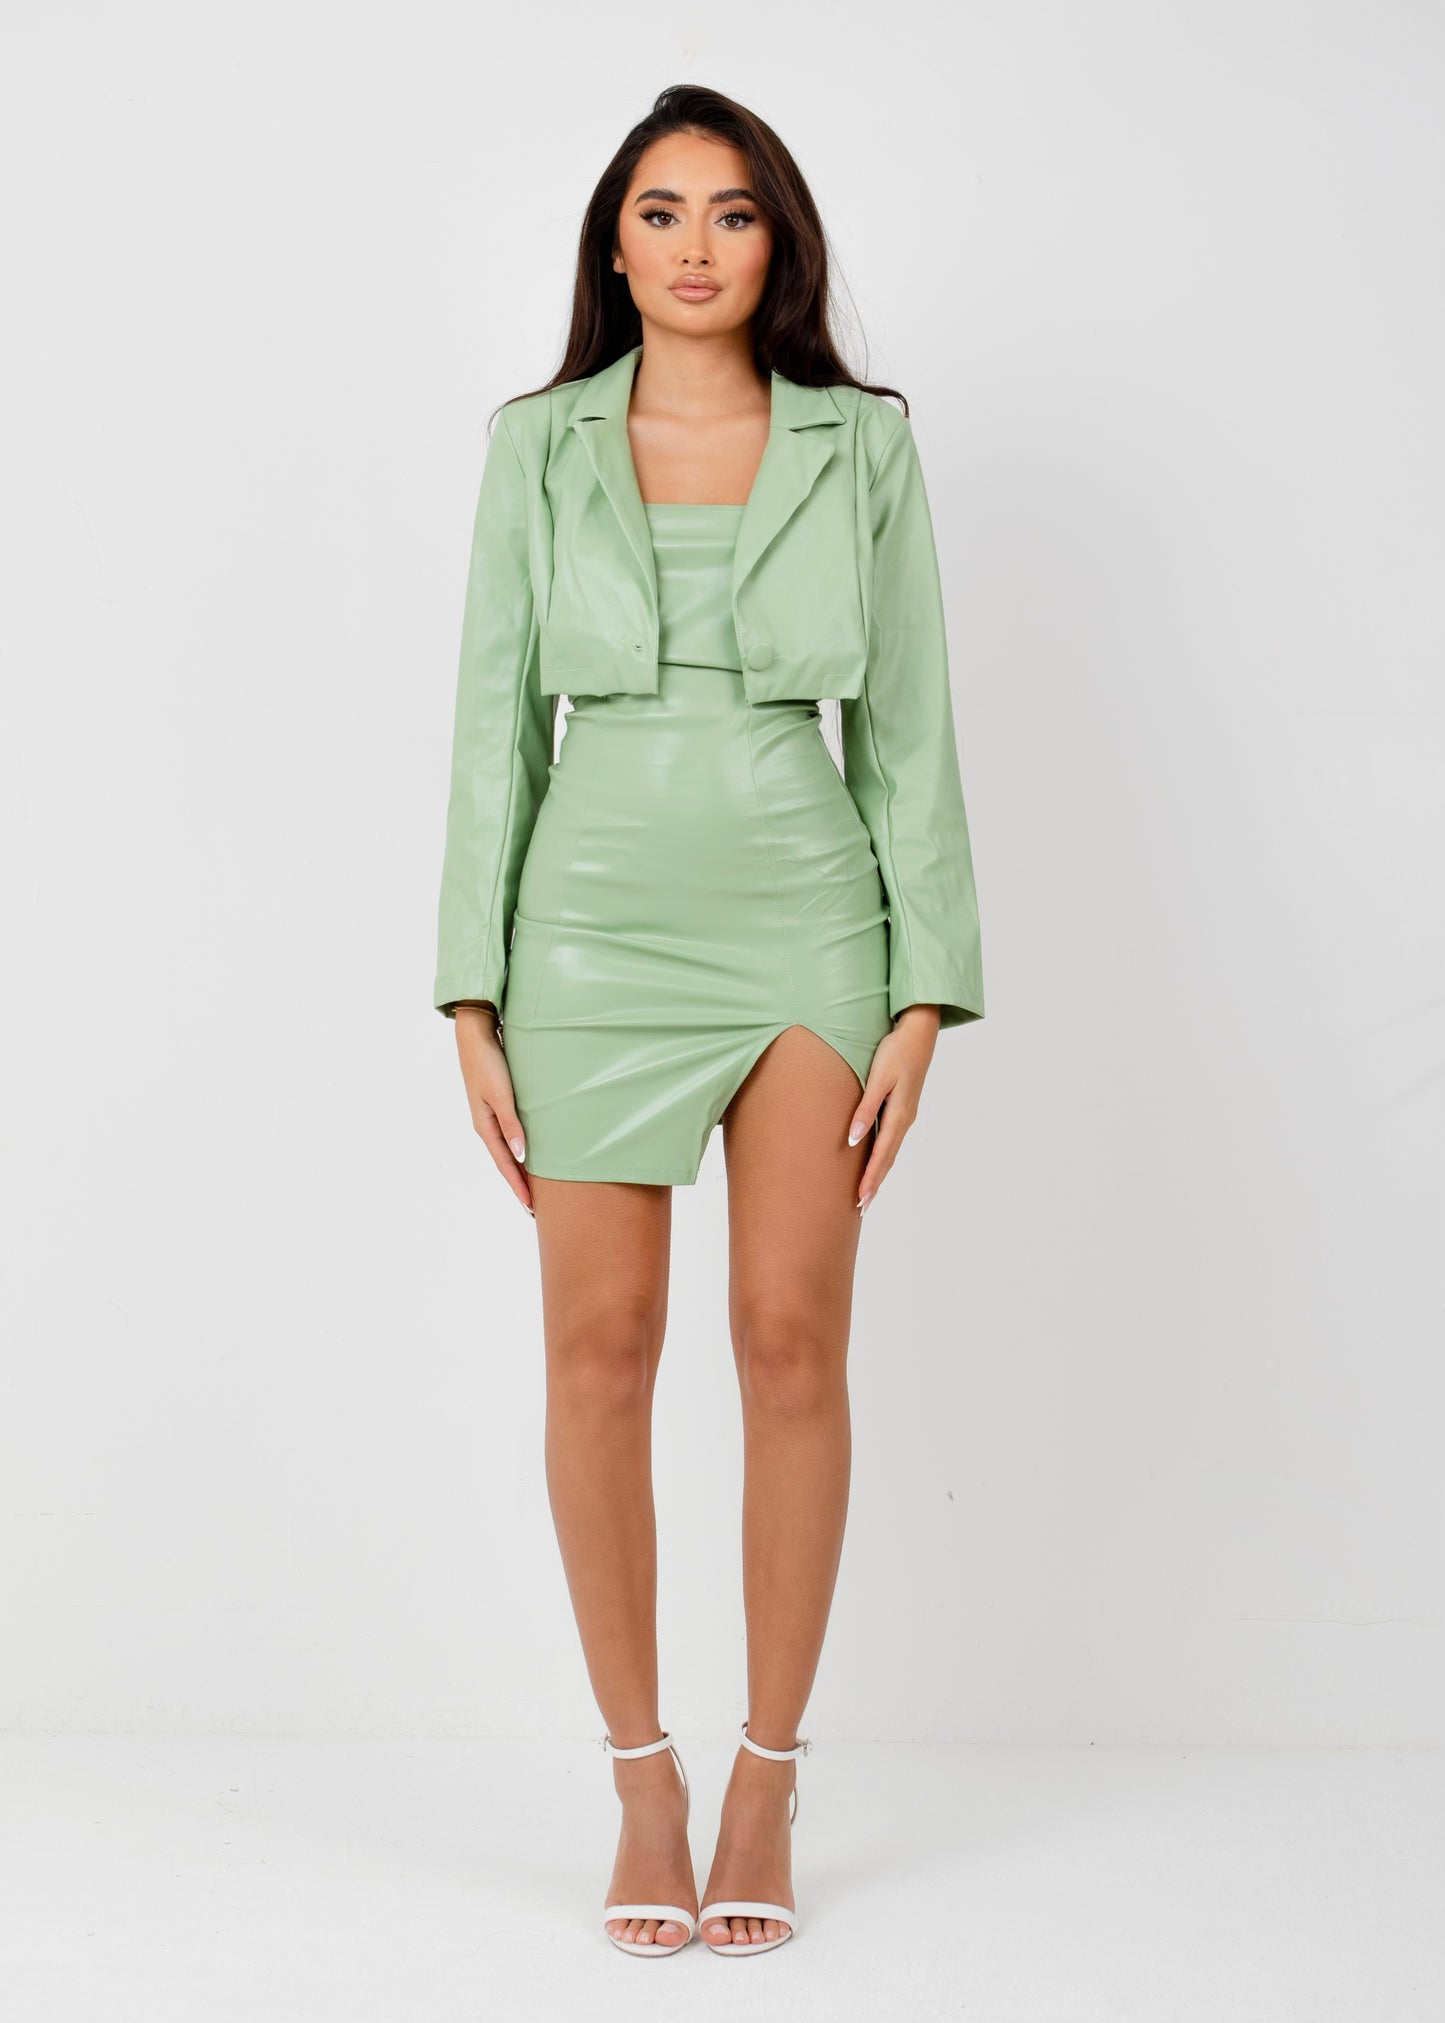 JOIE - Green Dress & Crop Jacket